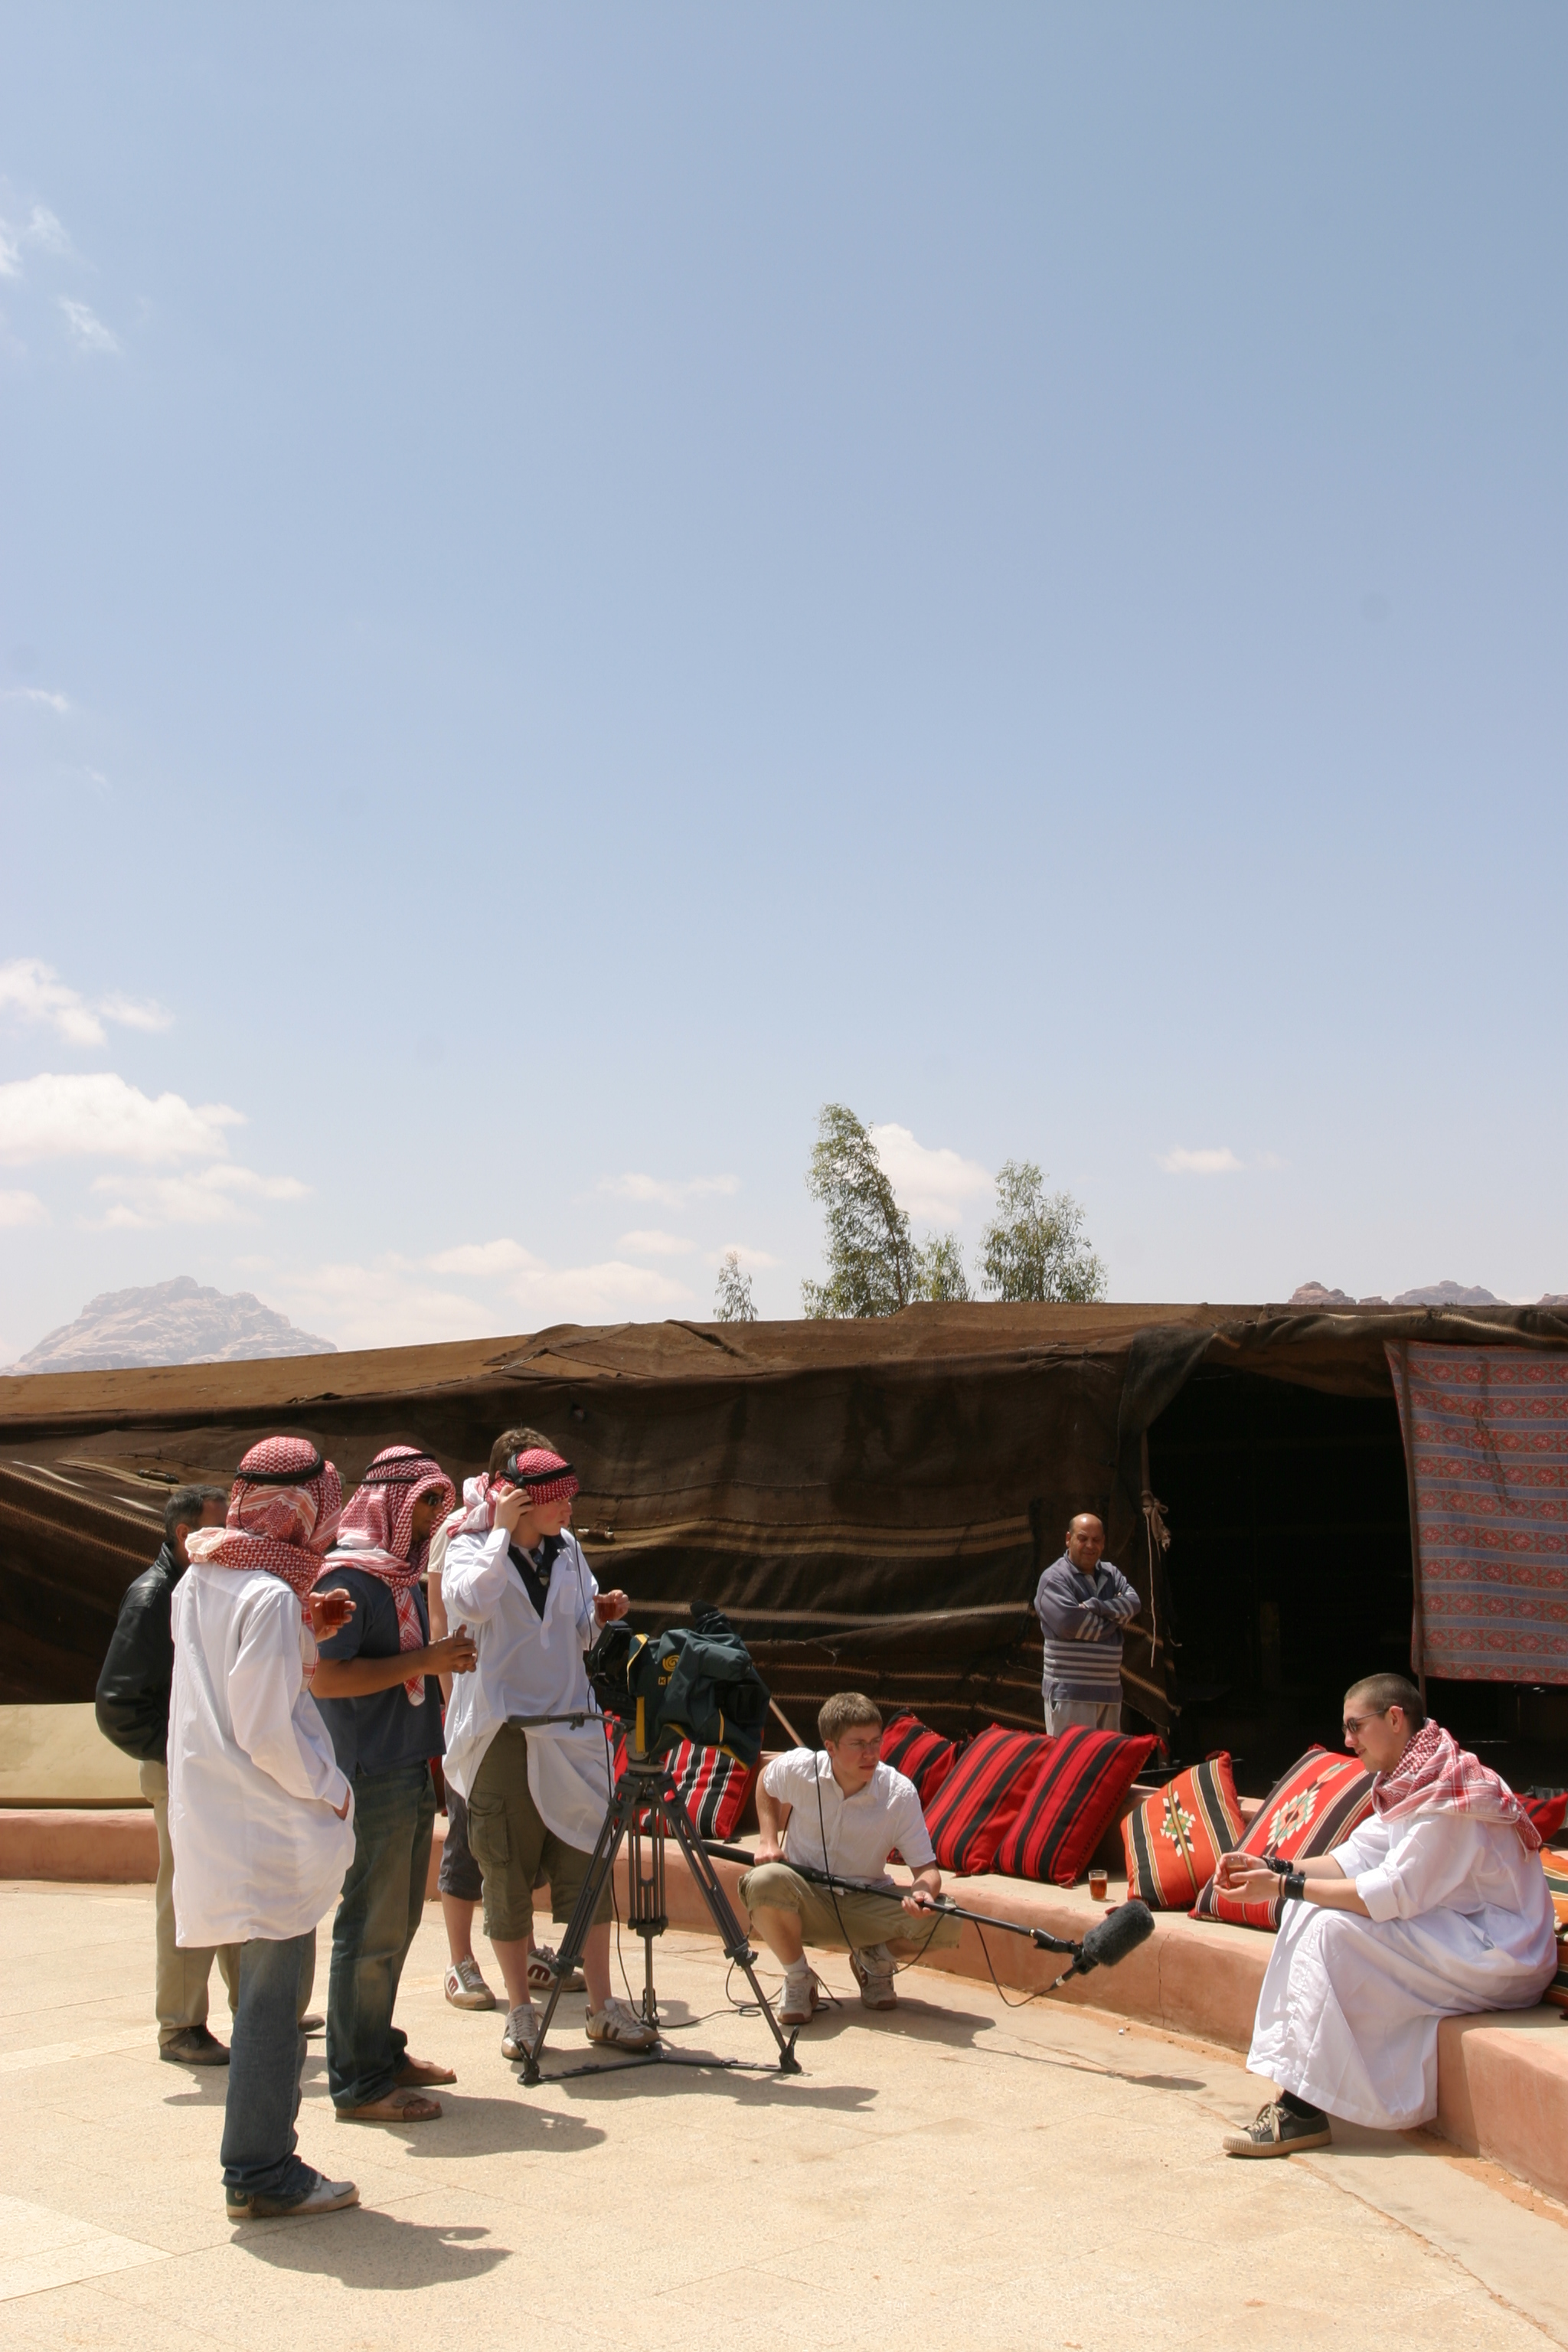 On location for 'Footsteps in Arabia' at a Bedouin Camp (Wadi Rum Desert, Jordan)